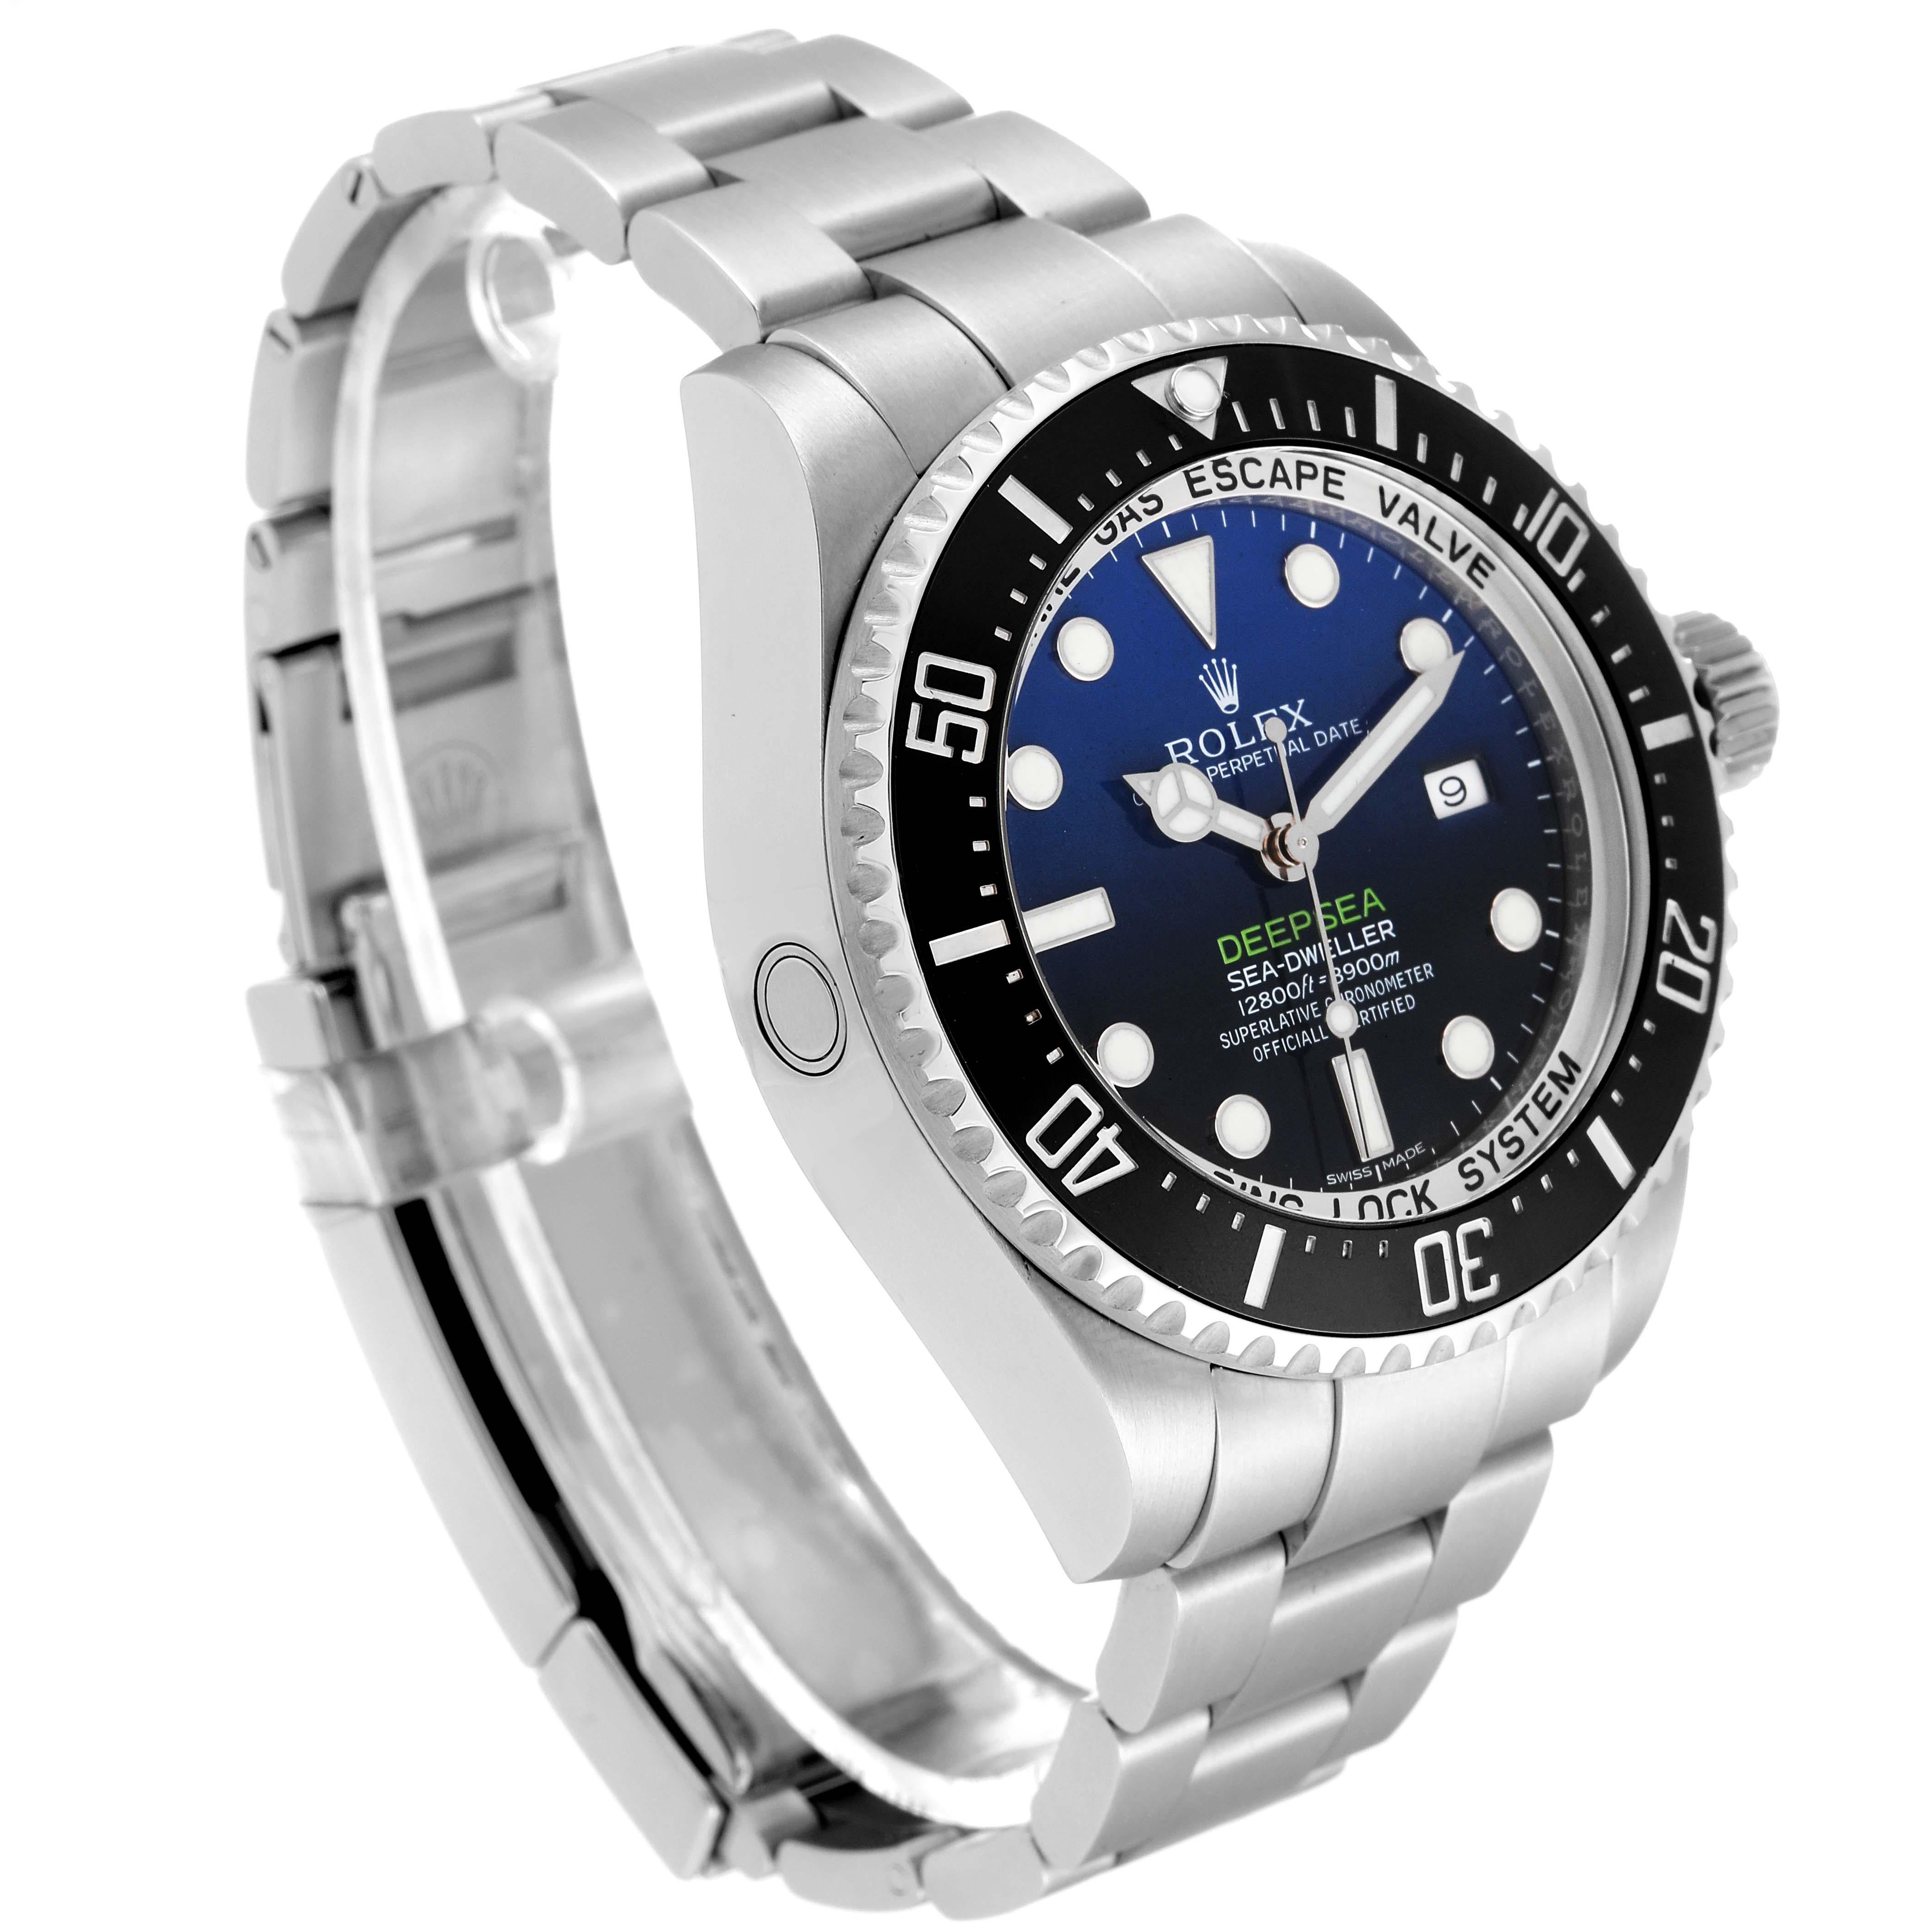 Rolex Seadweller Deepsea Cameron D-Blue Steel Mens Watch 116660 Box Card For Sale 2